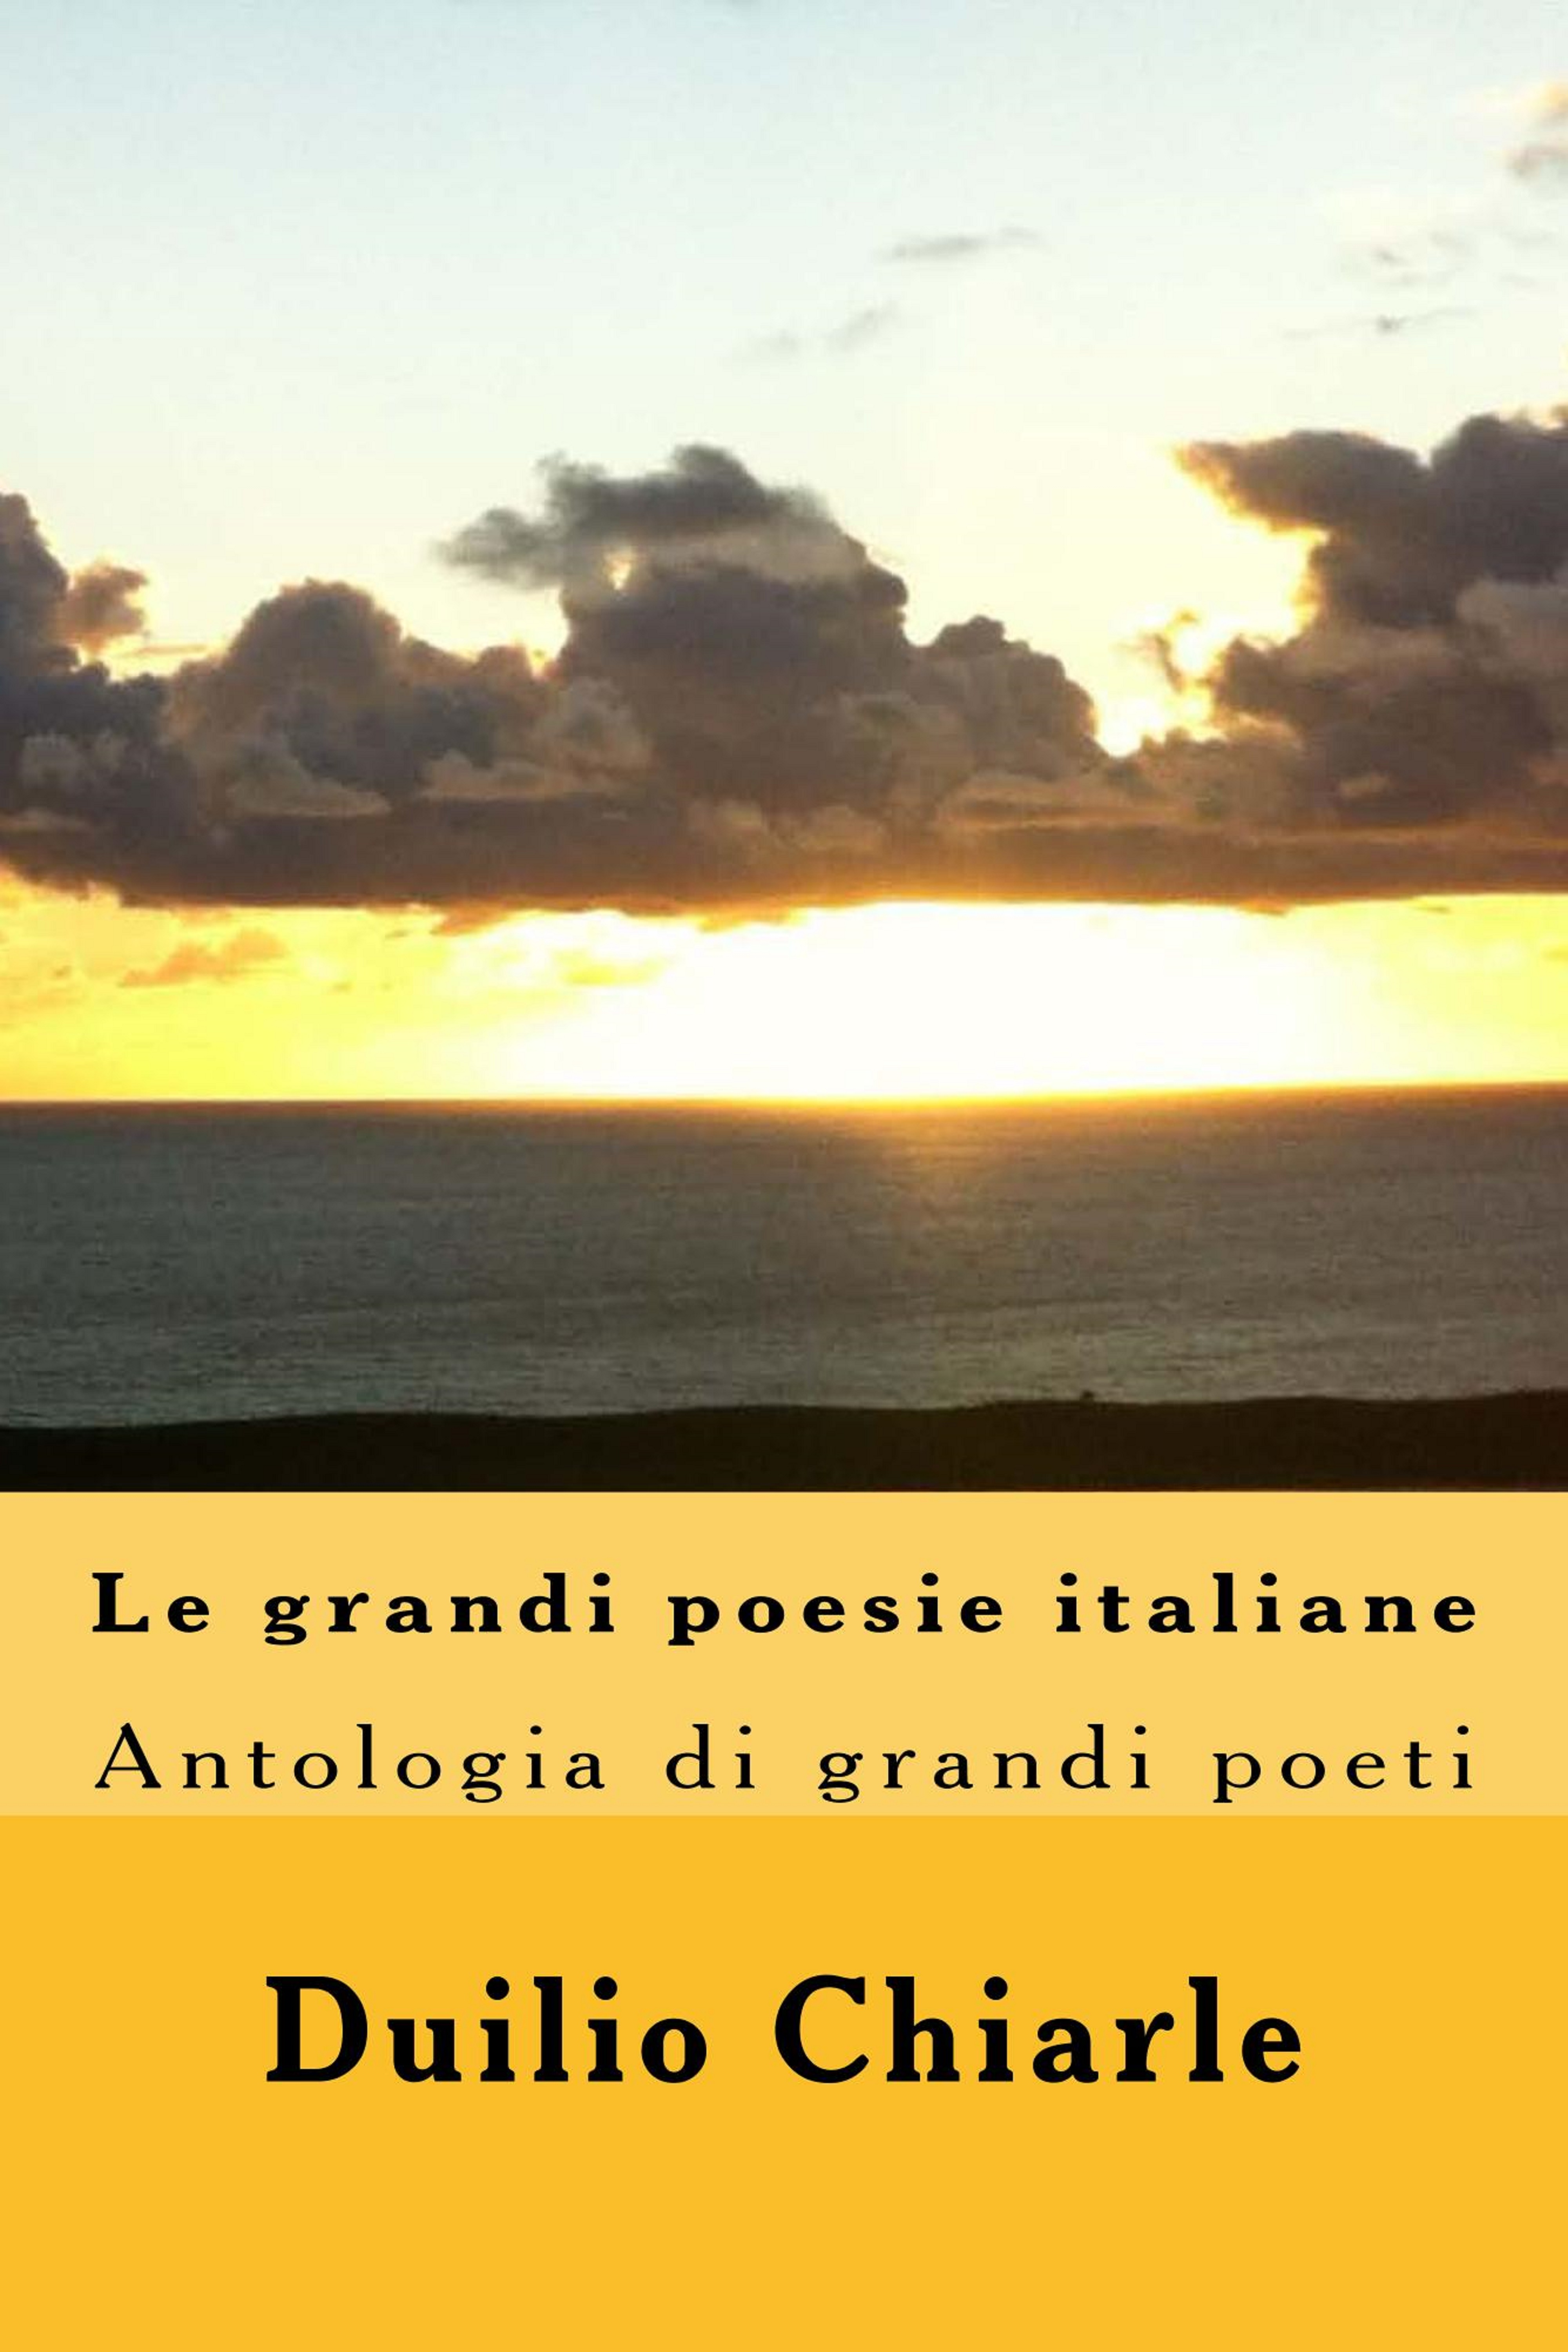 Le grandi poesie italiane: Antologia 1)